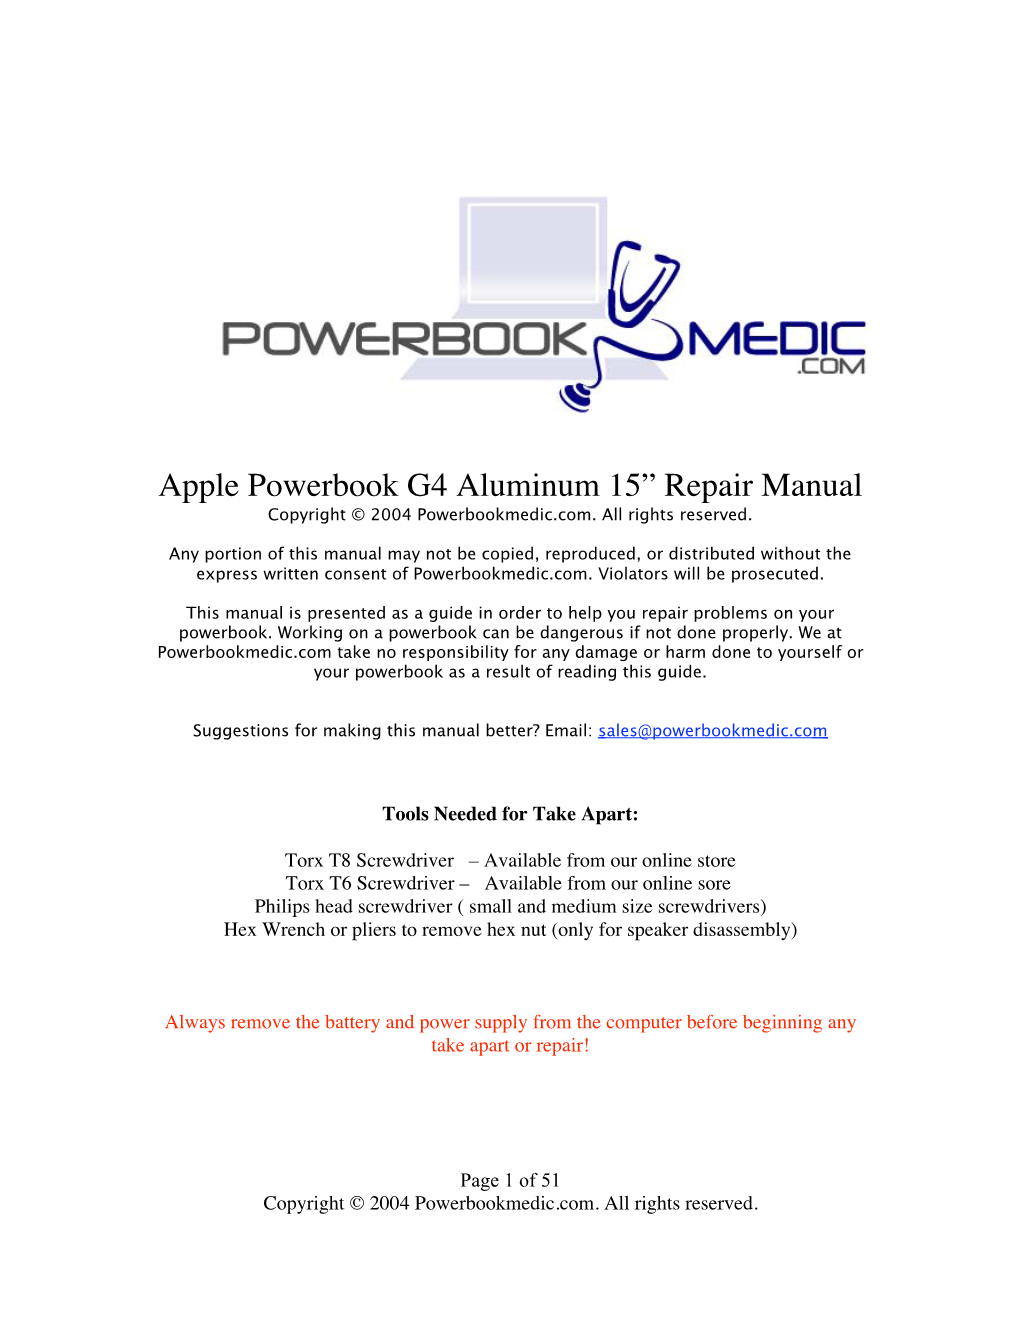 Apple Powerbook G4 Aluminum 15” Repair Manual Copyright © 2004 Powerbookmedic.Com